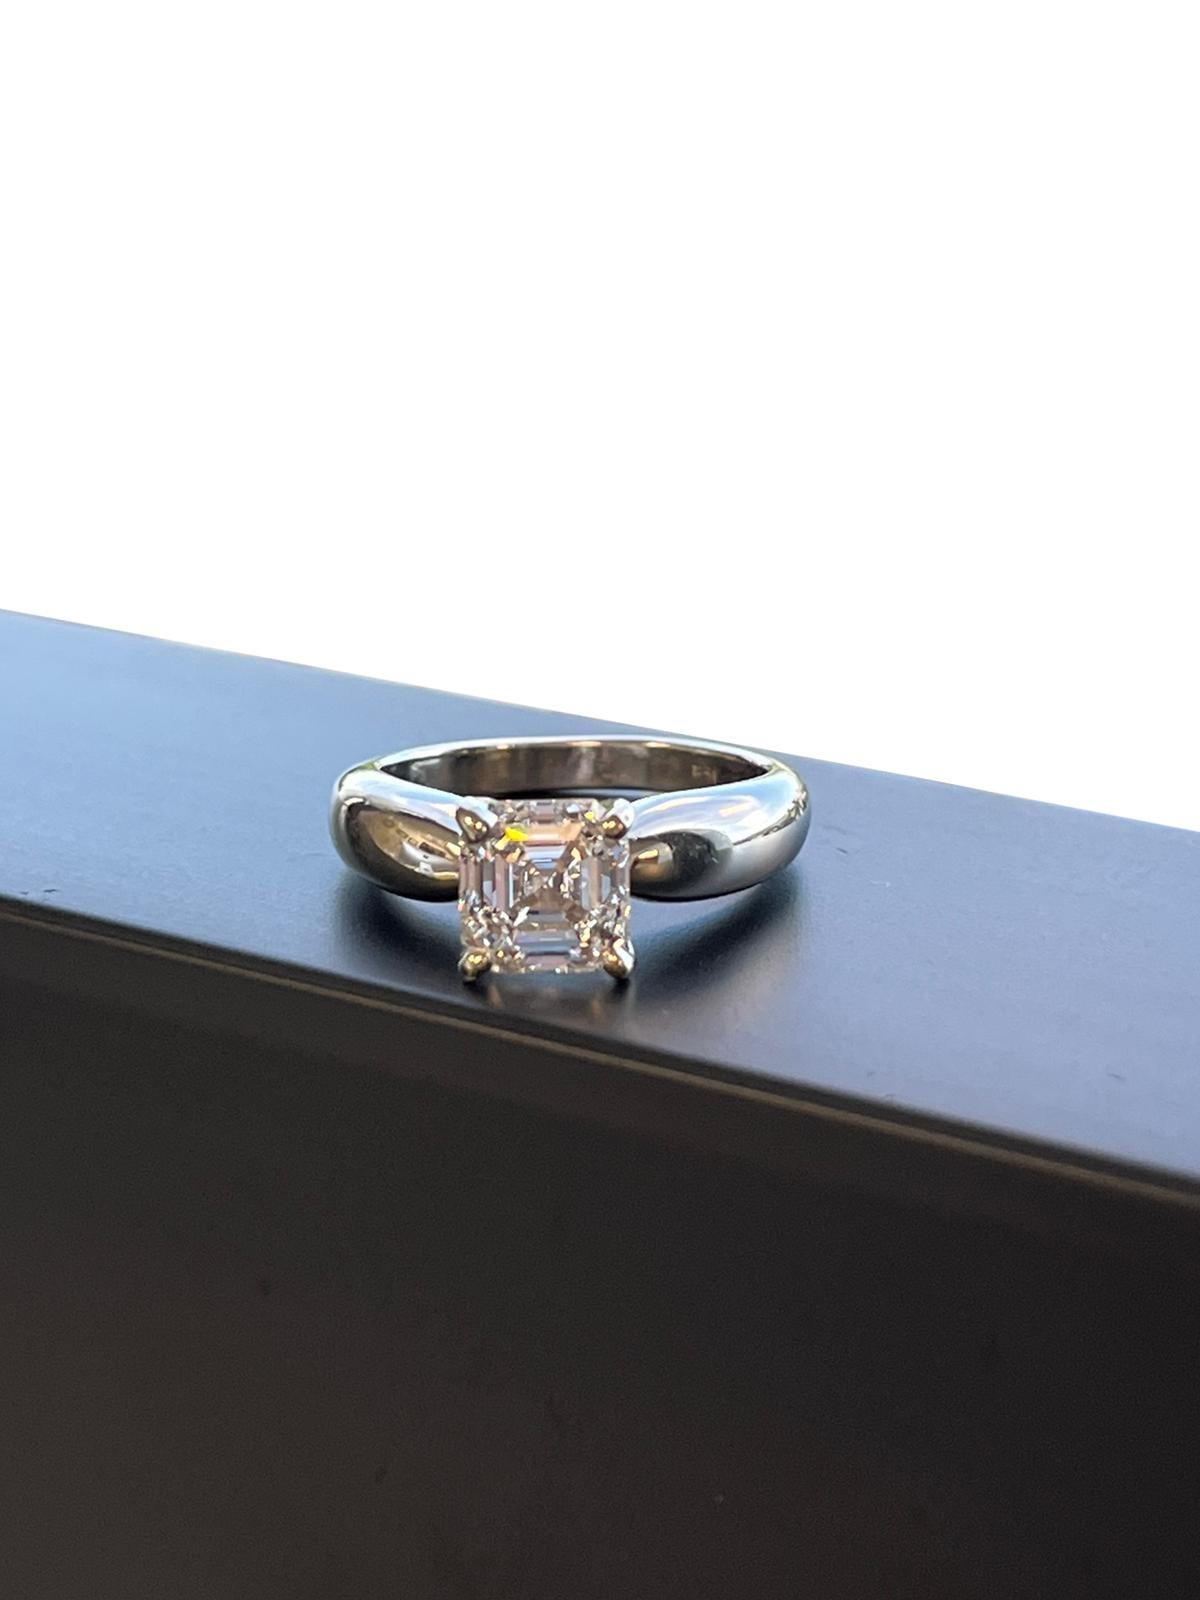 Flawless GIA Certified 2.01 Carat Asscher Cut Diamond Ring 18 Karat White Gold For Sale 5